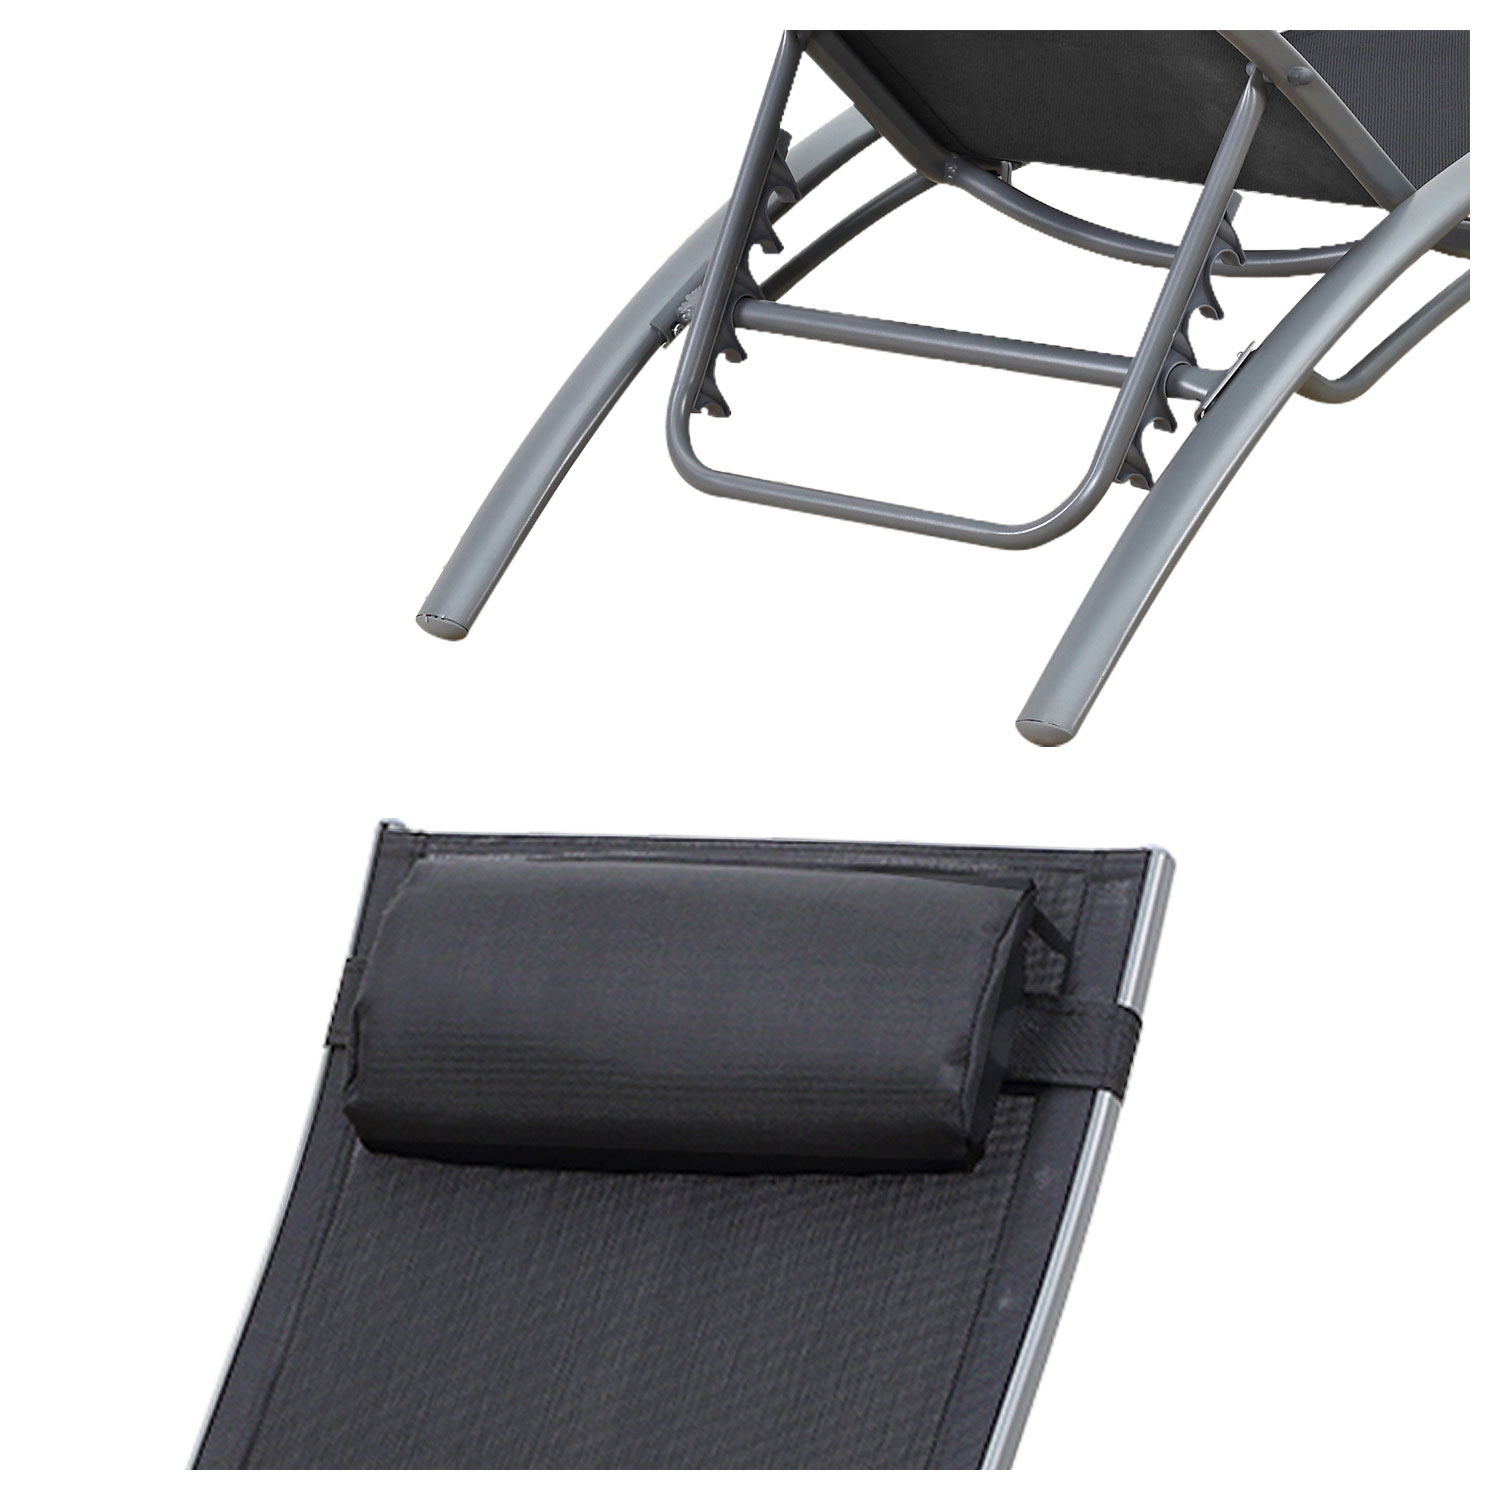 Set di 2 sedie a sdraio GALAPAGOS in textilene grigio - alluminio grigio